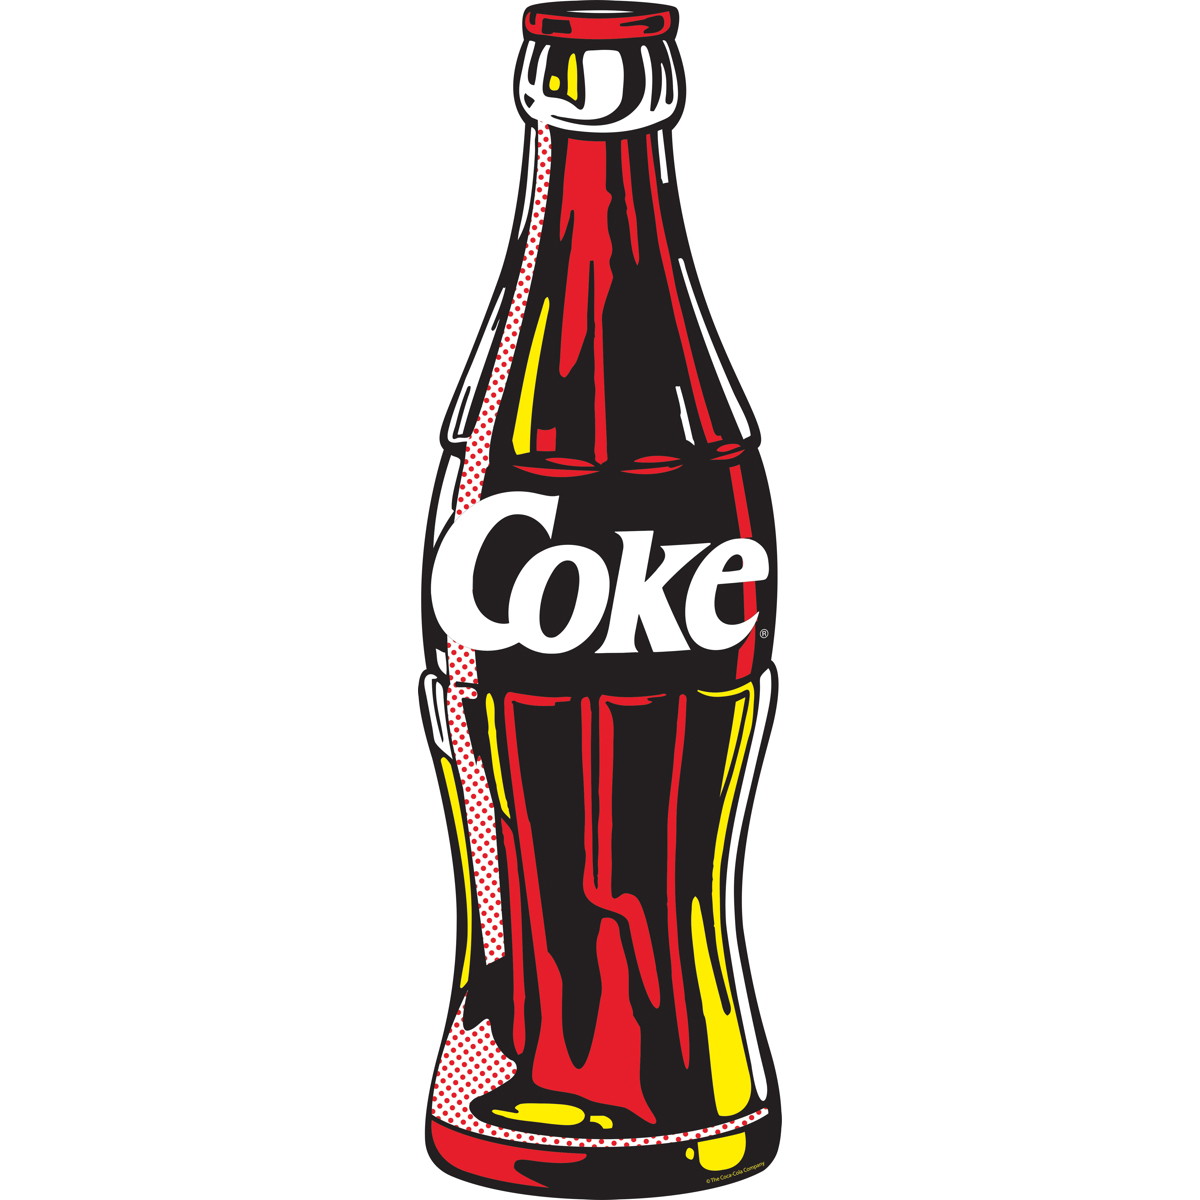 Pop clipart coke, Pop coke Transparent FREE for download on